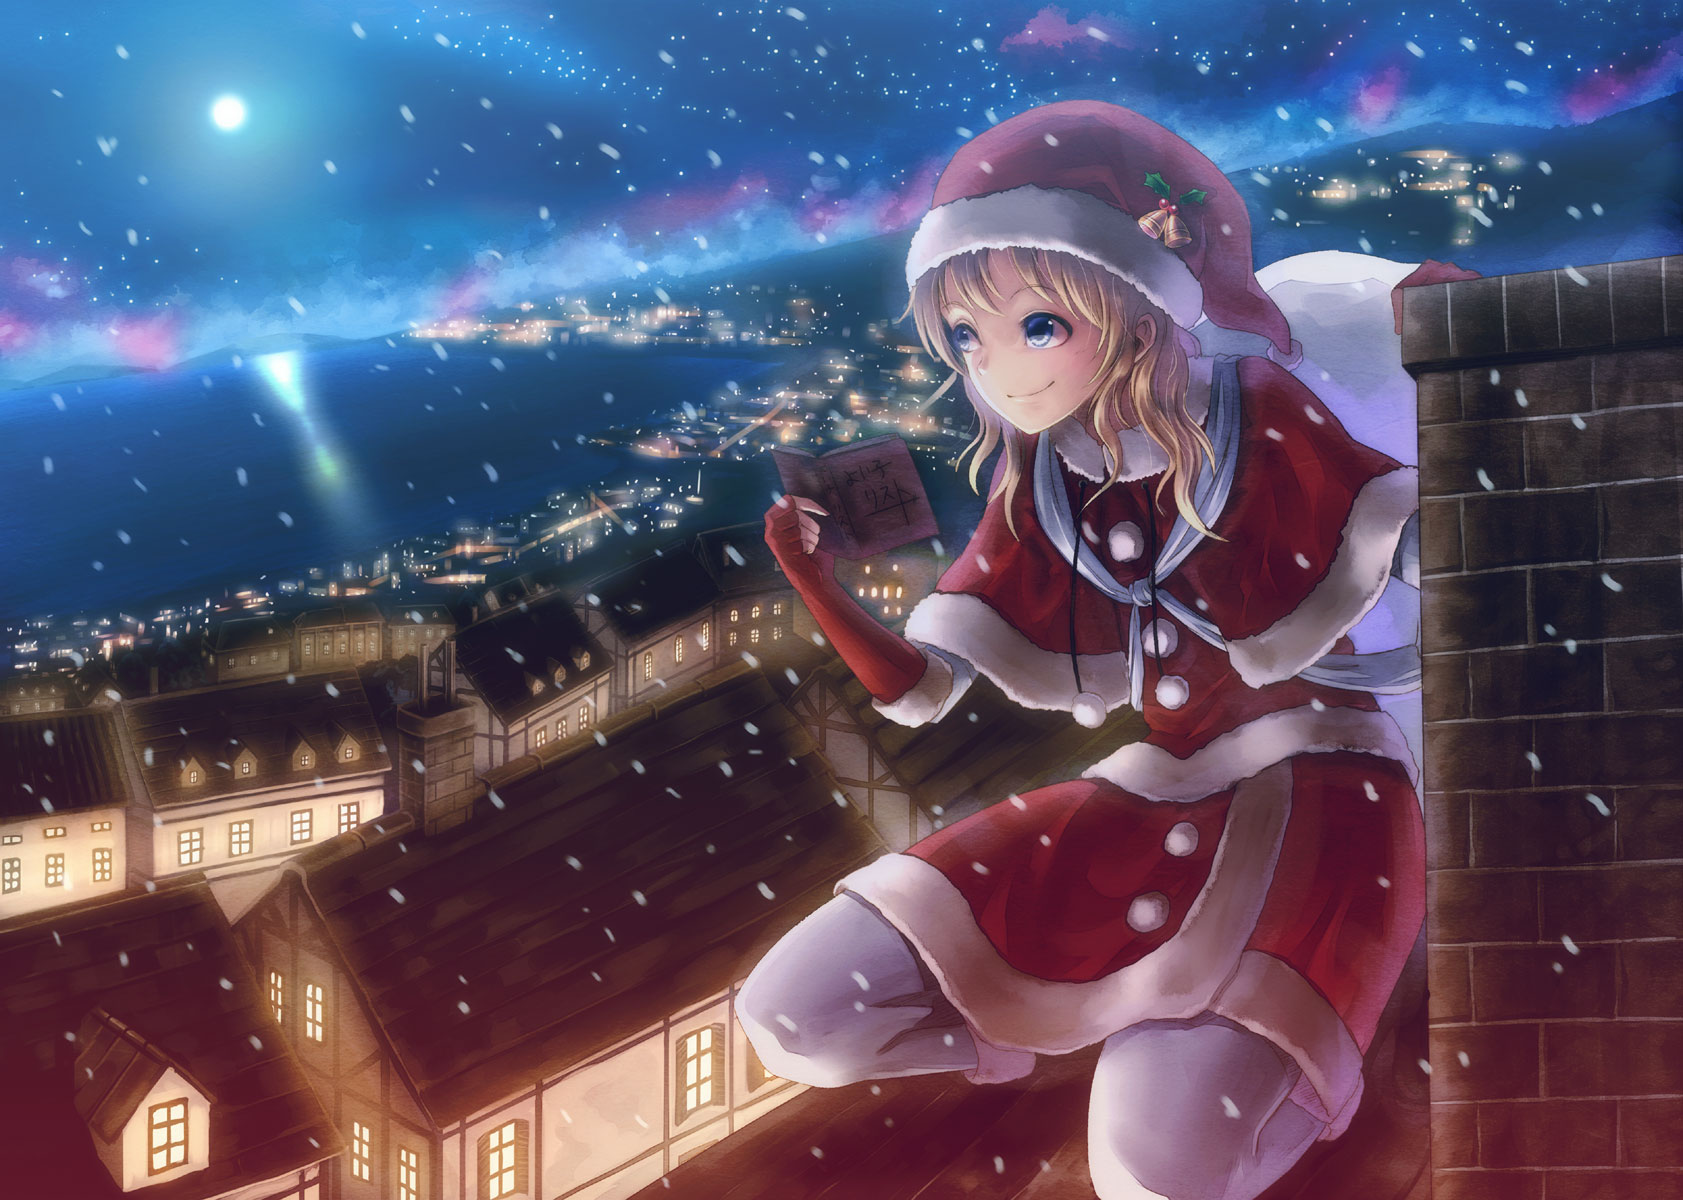 10 Pieces of drawn (manga/anime) holiday fan art #Christmas Special |  Bryandlblog